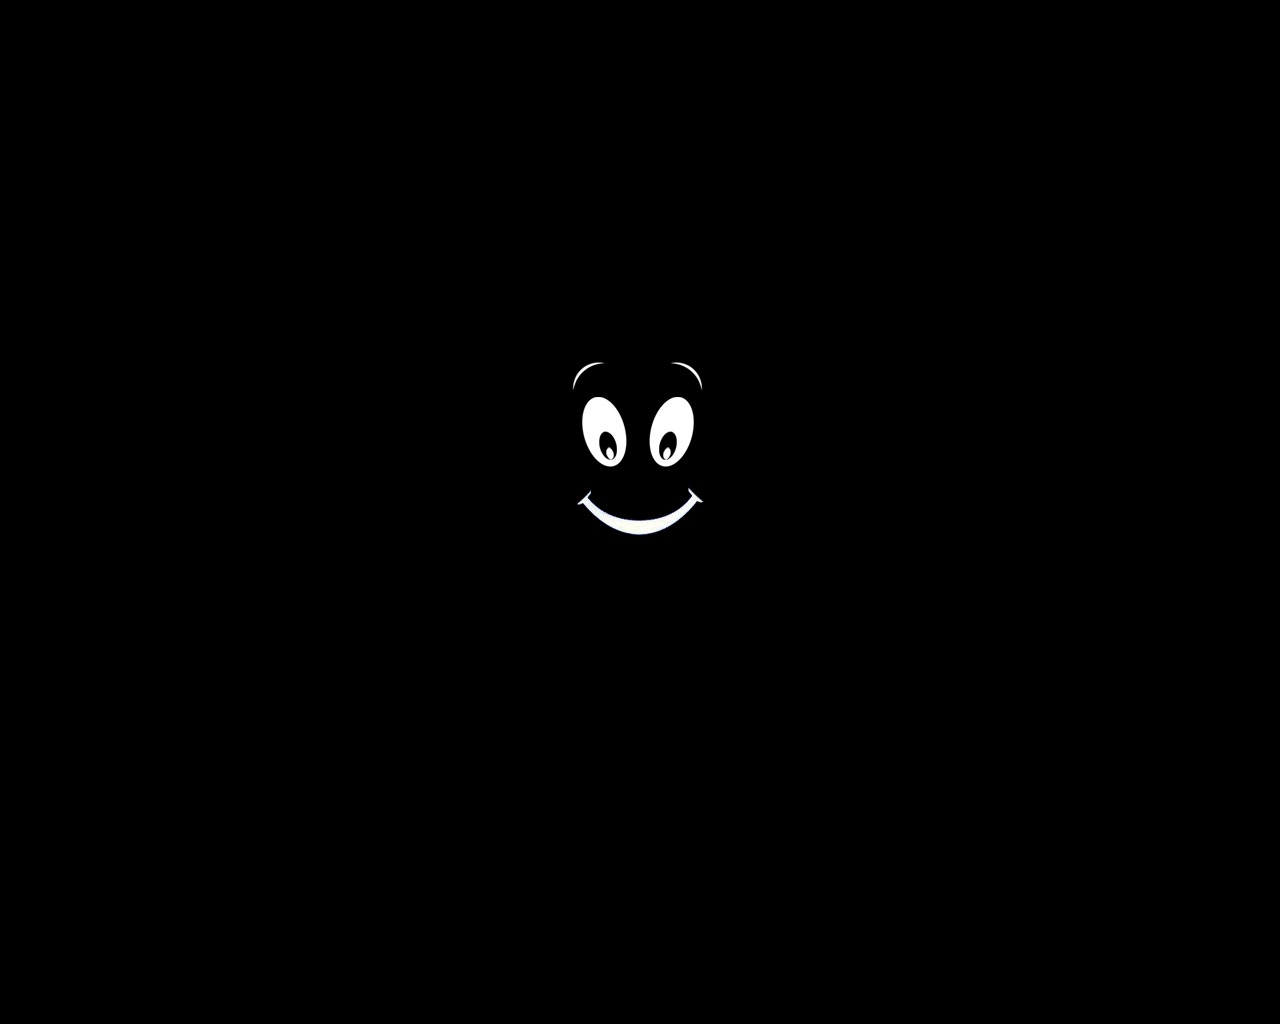 Smile - A simple Black Wallpaper